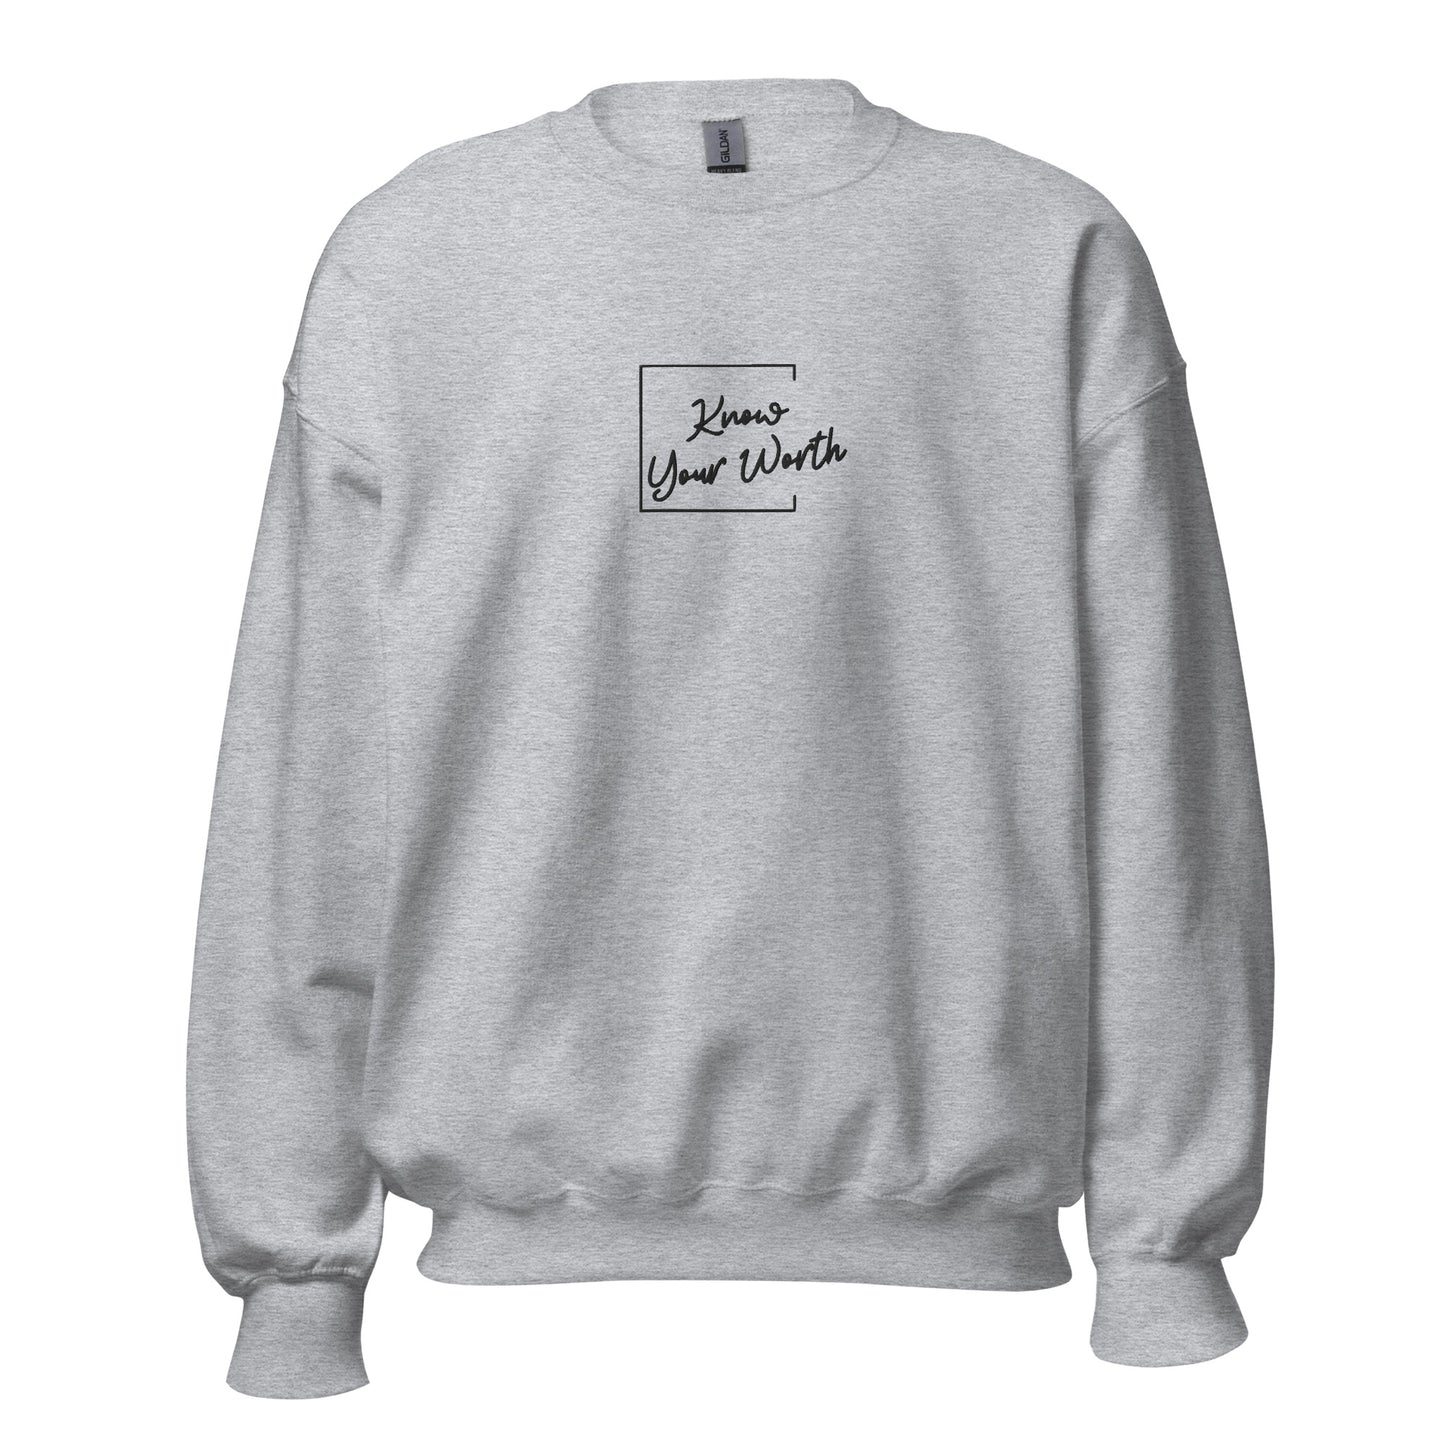 Unisex Embroidery Sweatshirt Worth